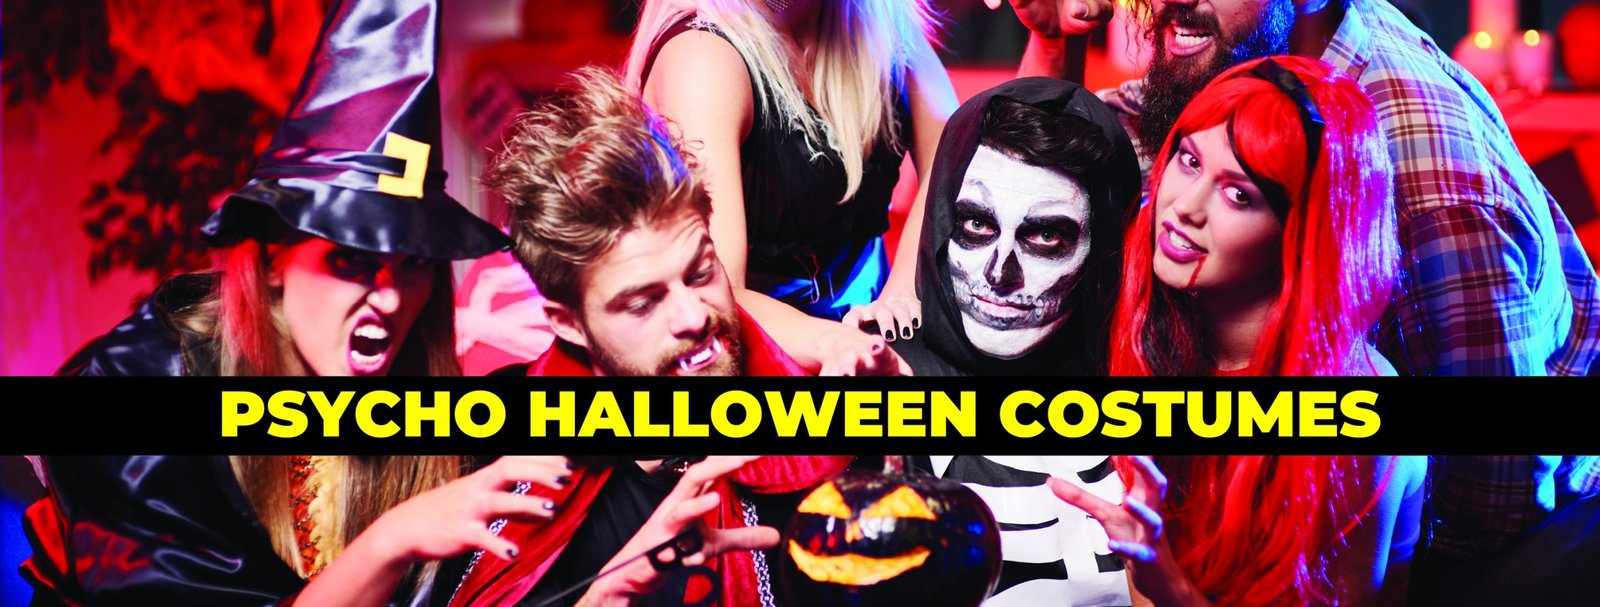 Psycho Halloween Costumes